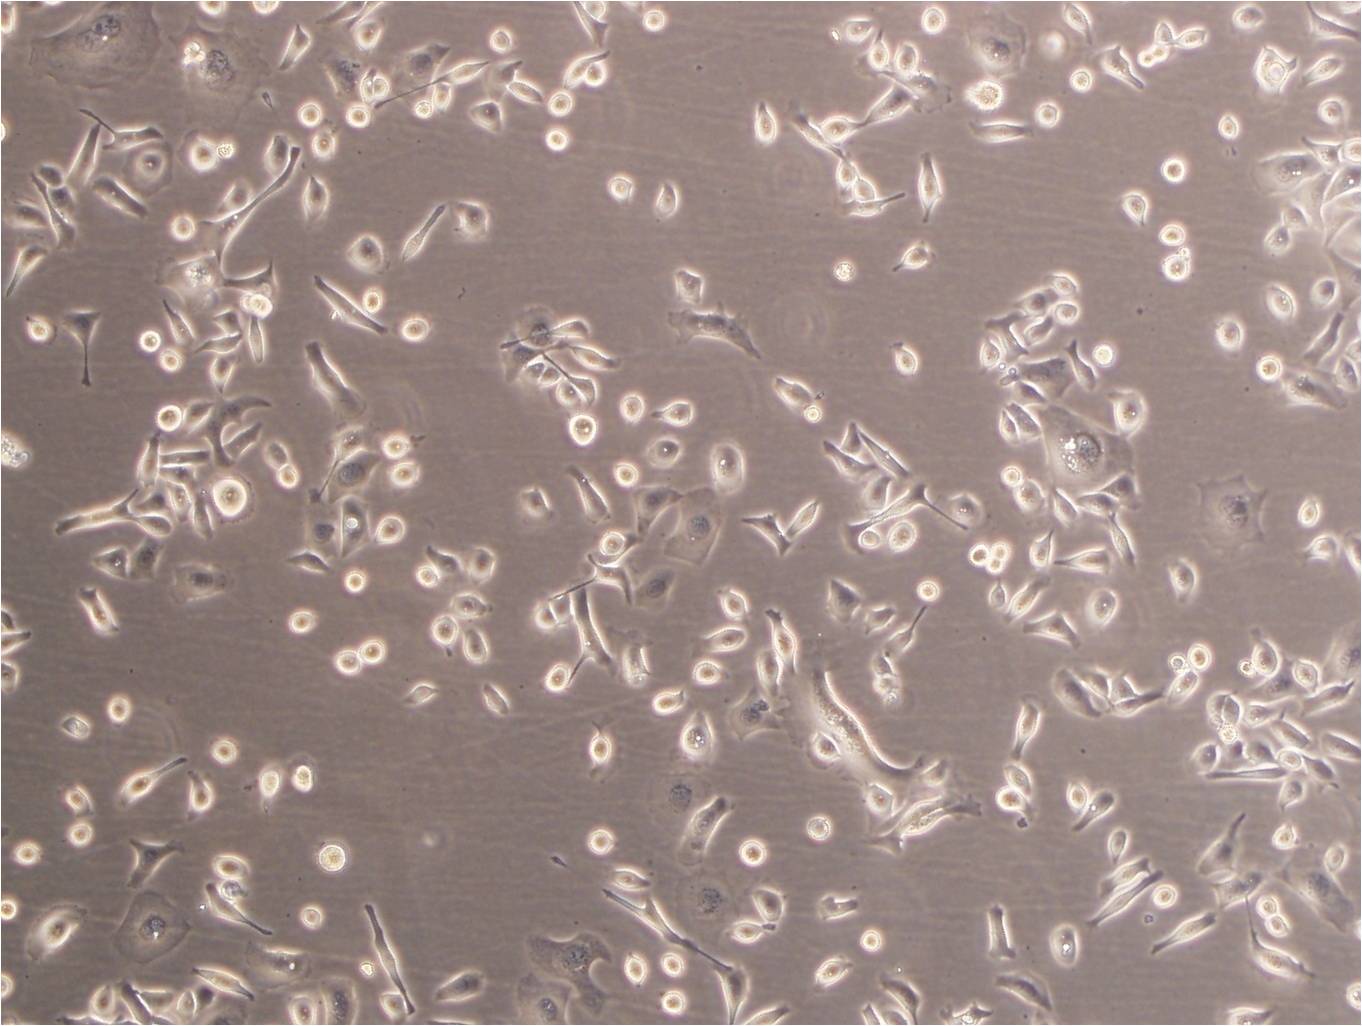 McA-RH8994 Cell:大鼠肝癌细胞系,McA-RH8994 Cell